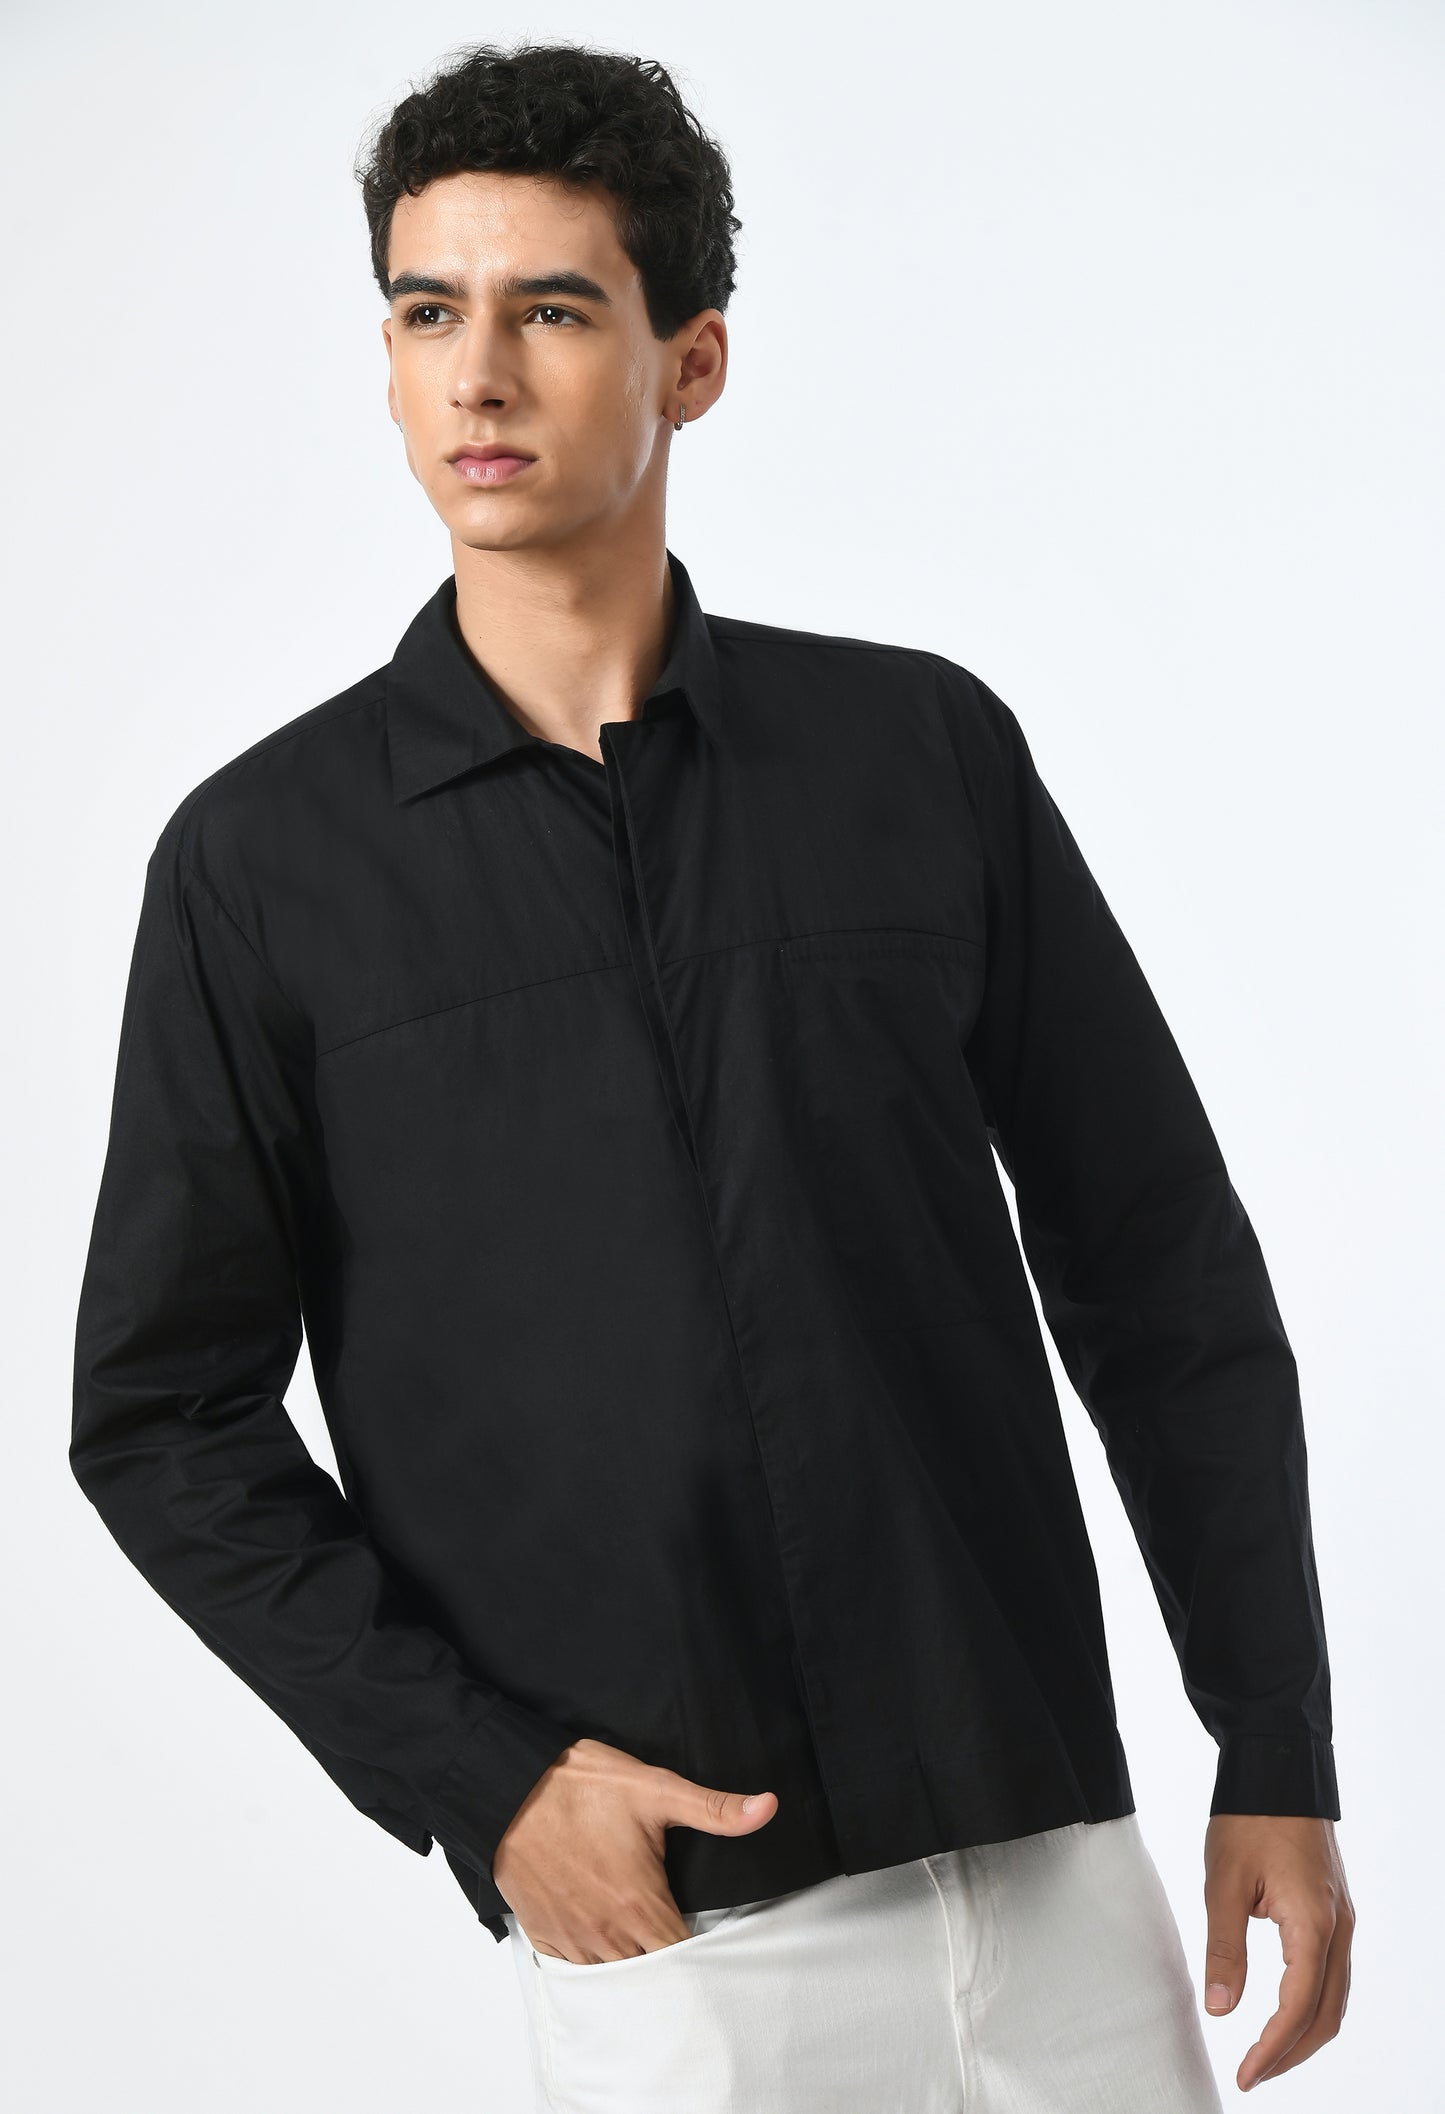 Black men's cotton shirt with a classic collar.